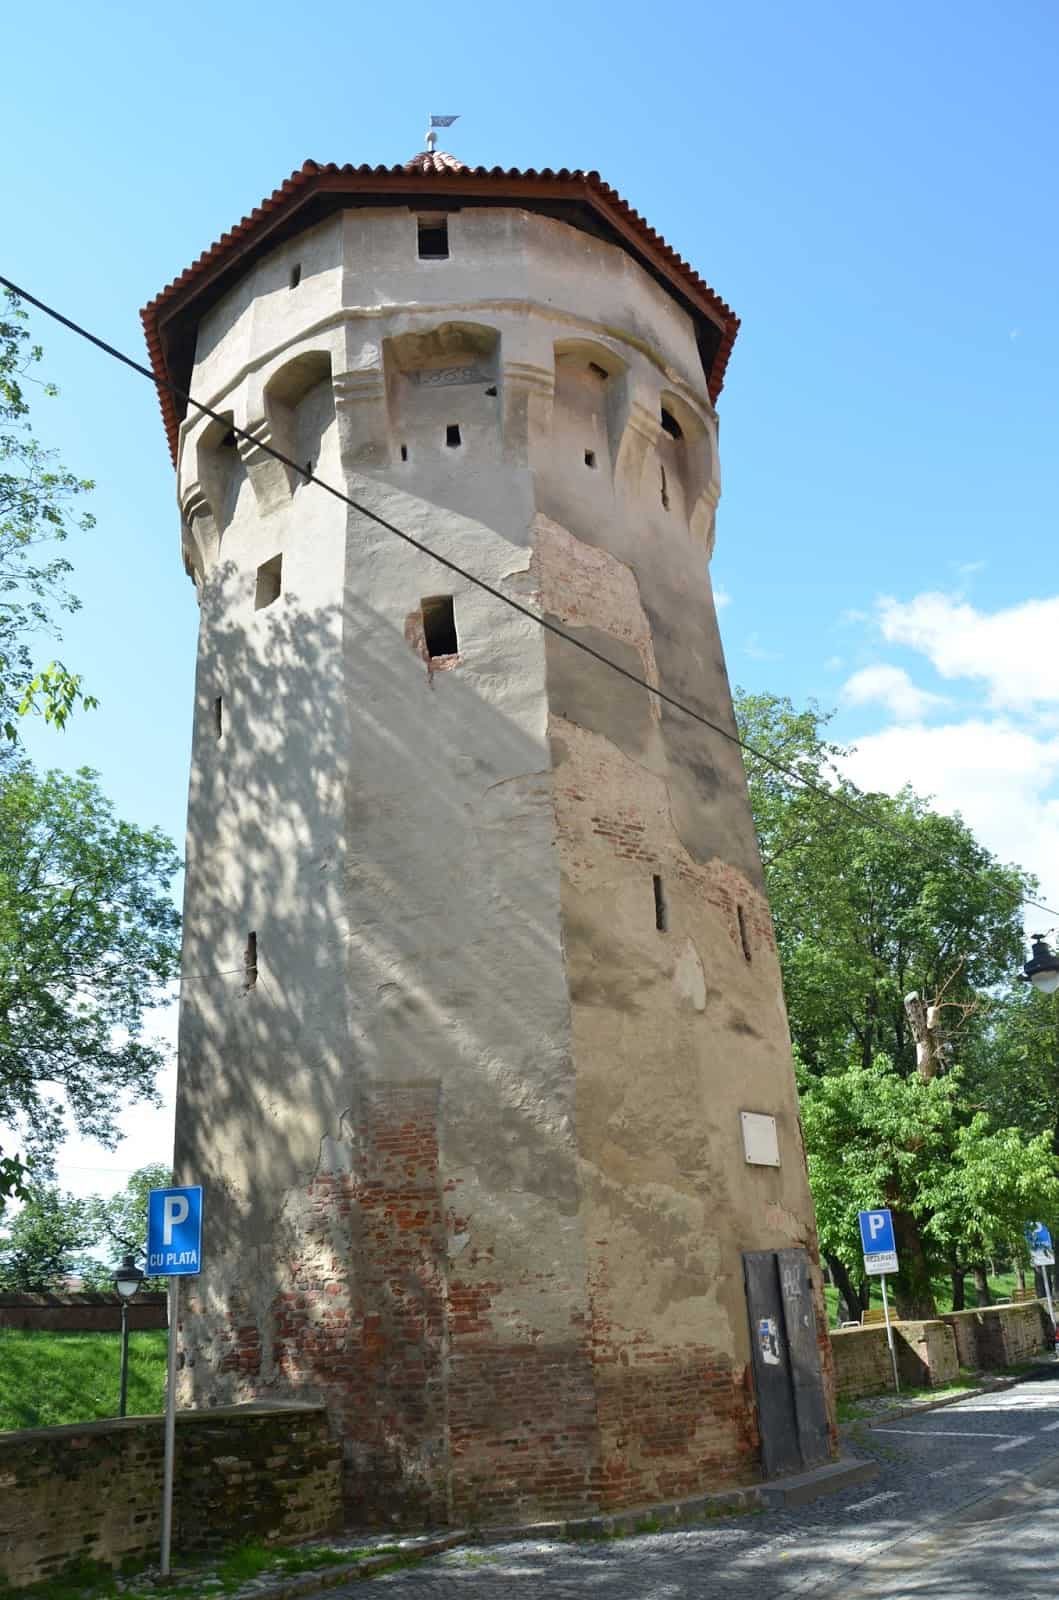 Harquebusier’s Tower in Sibiu, Romania